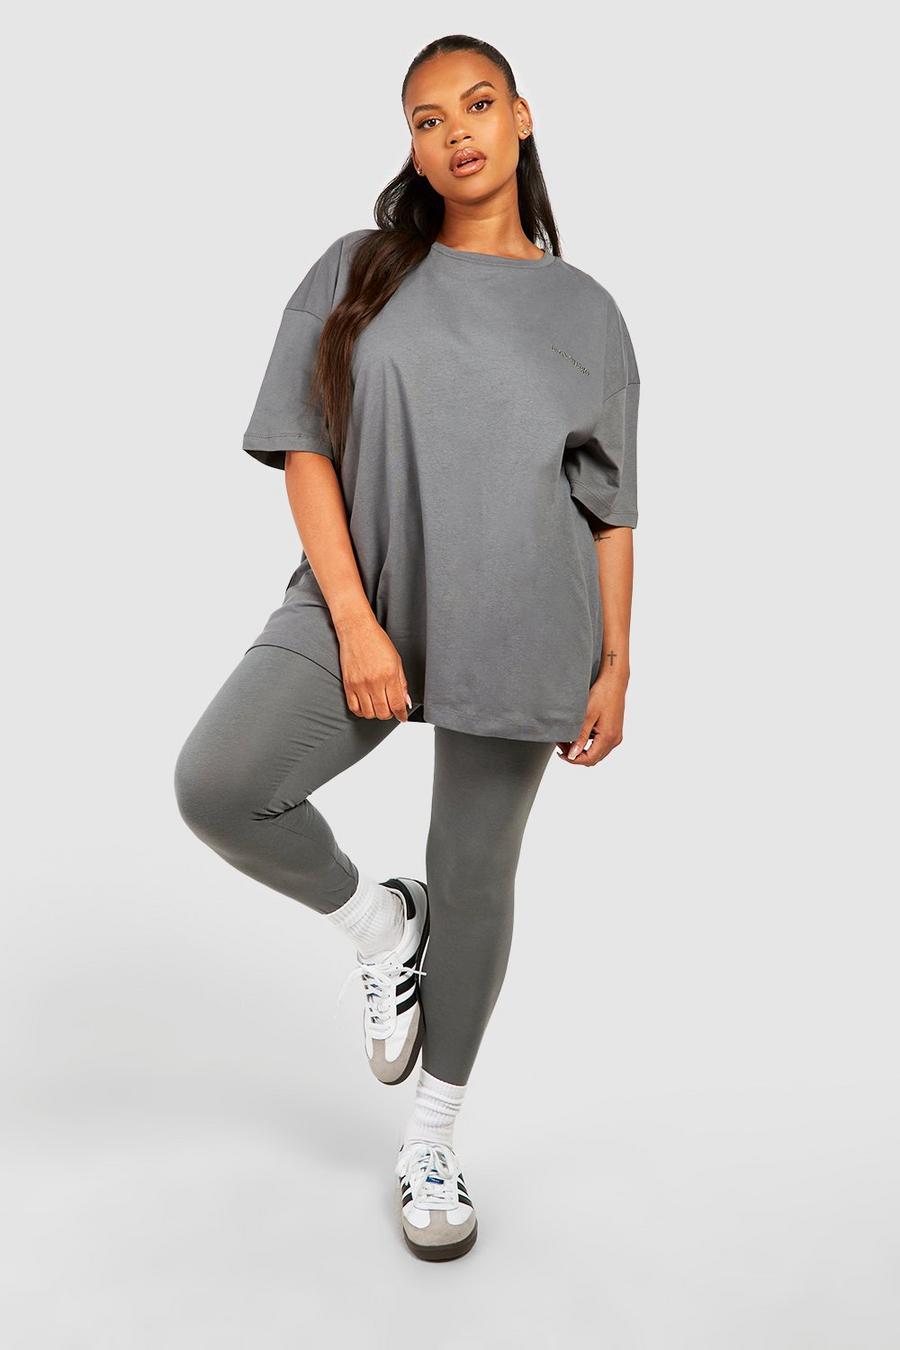 Grande taille - Ensemble oversize avec t-shirt et legging, Charcoal